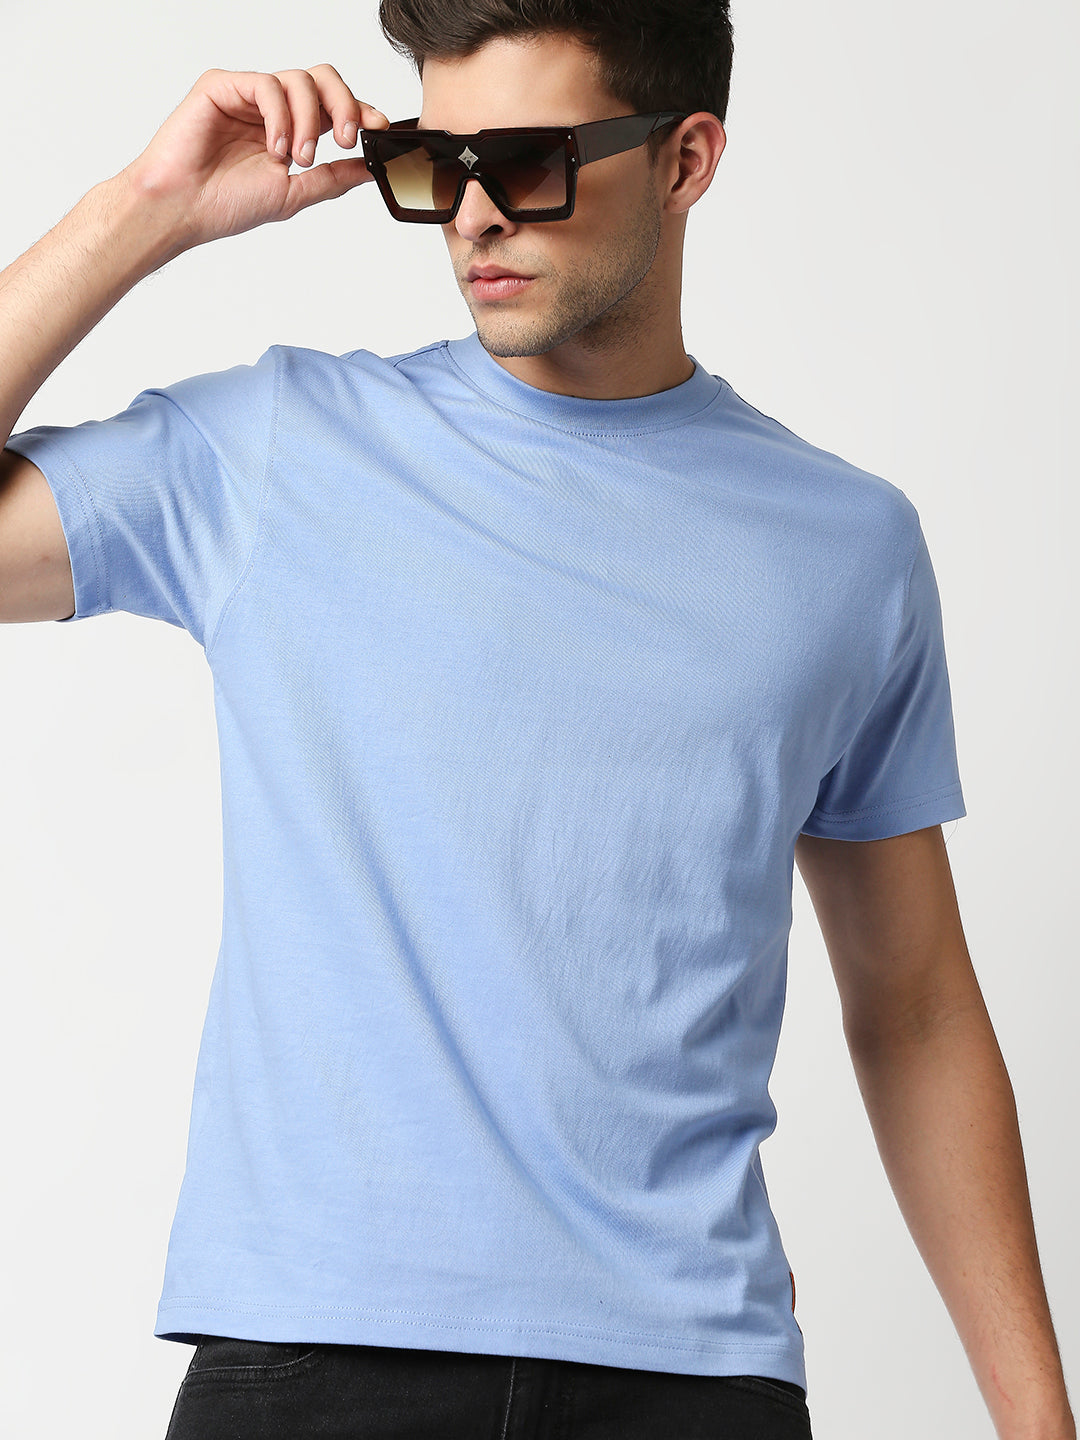 Buy Blamblack Men's Powder Blue Color Plain T Shirt